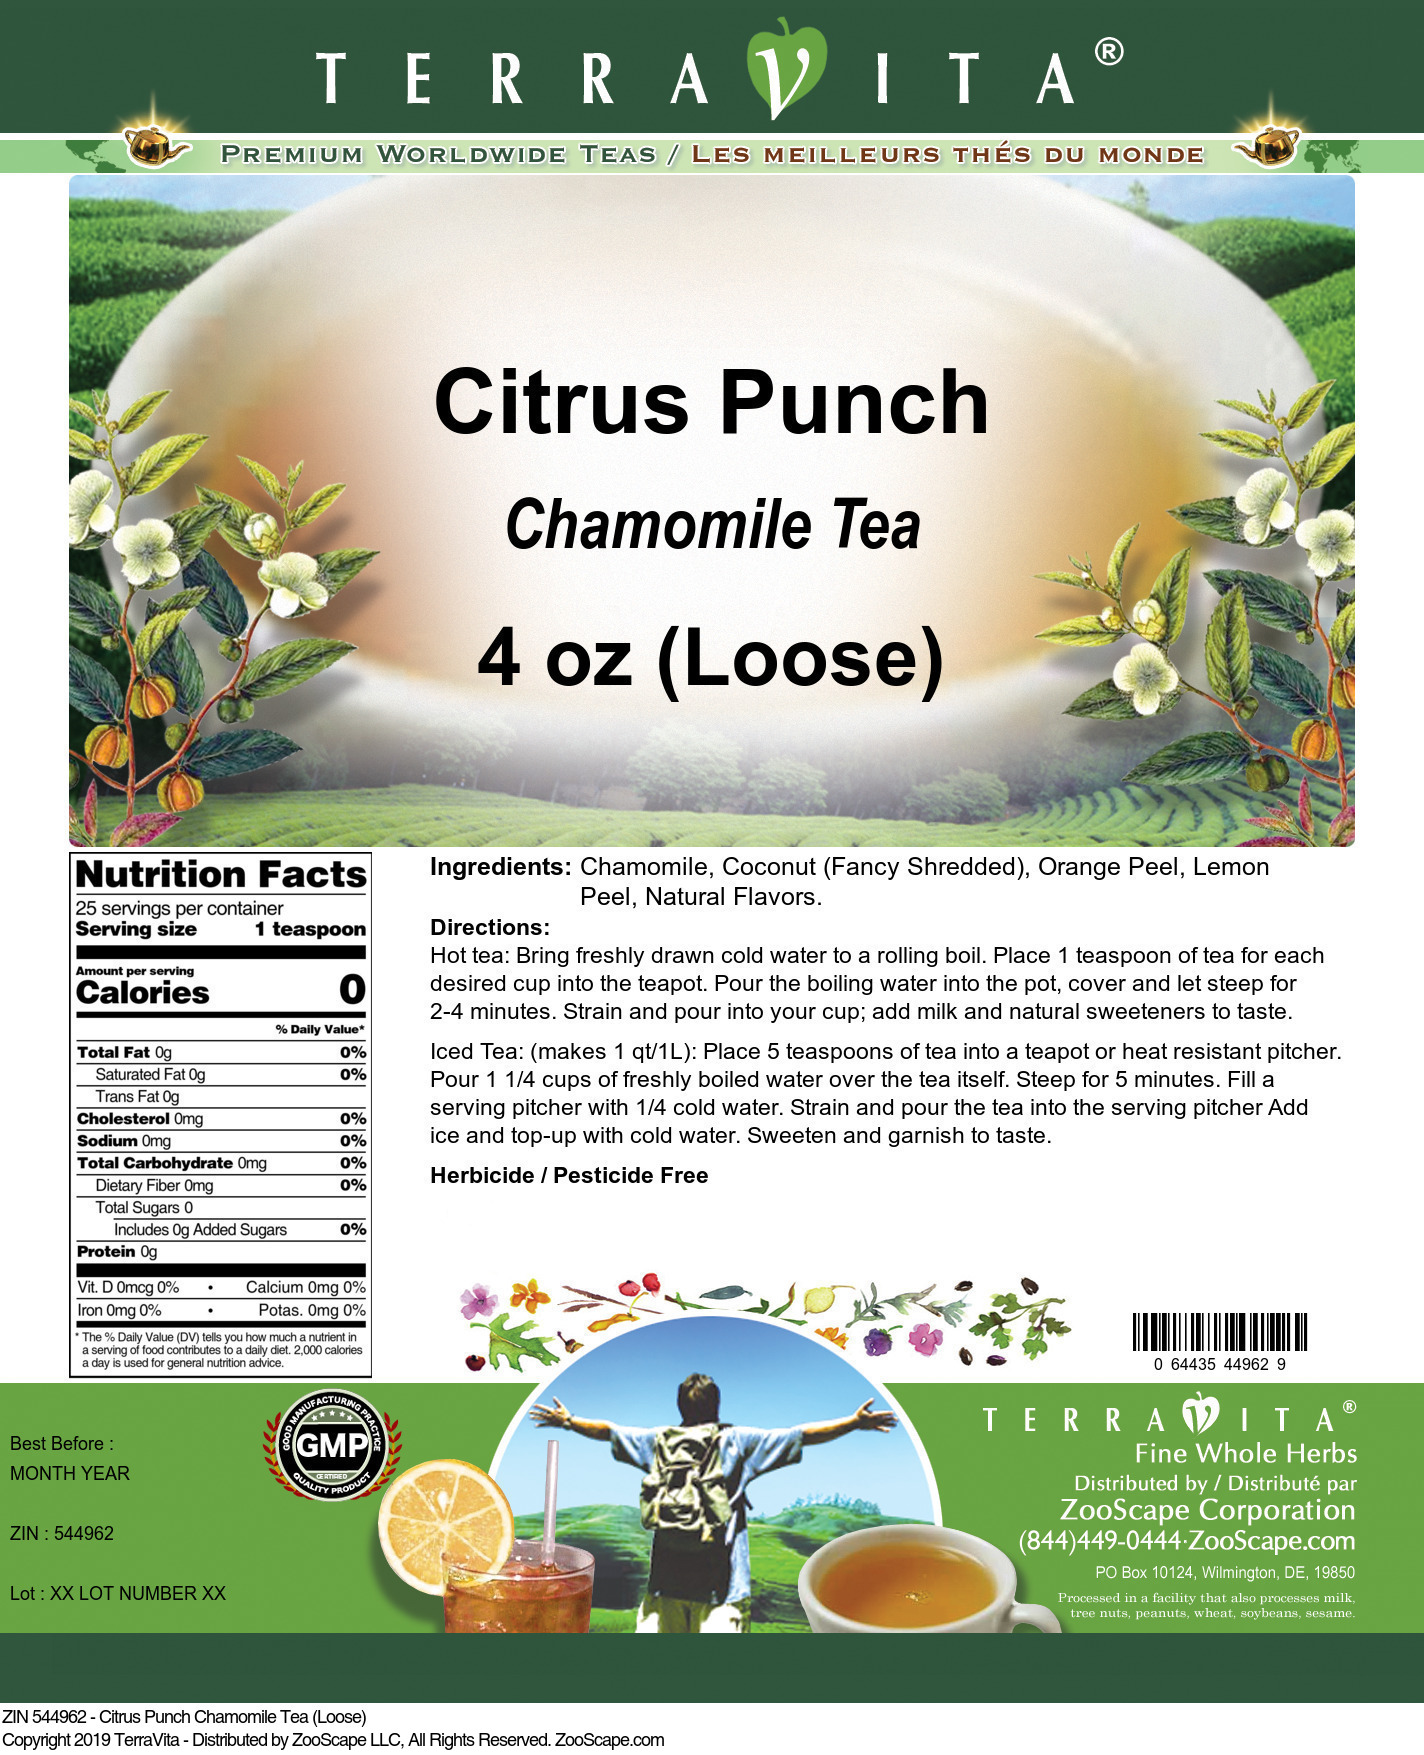 Citrus Punch Chamomile Tea (Loose) - Label